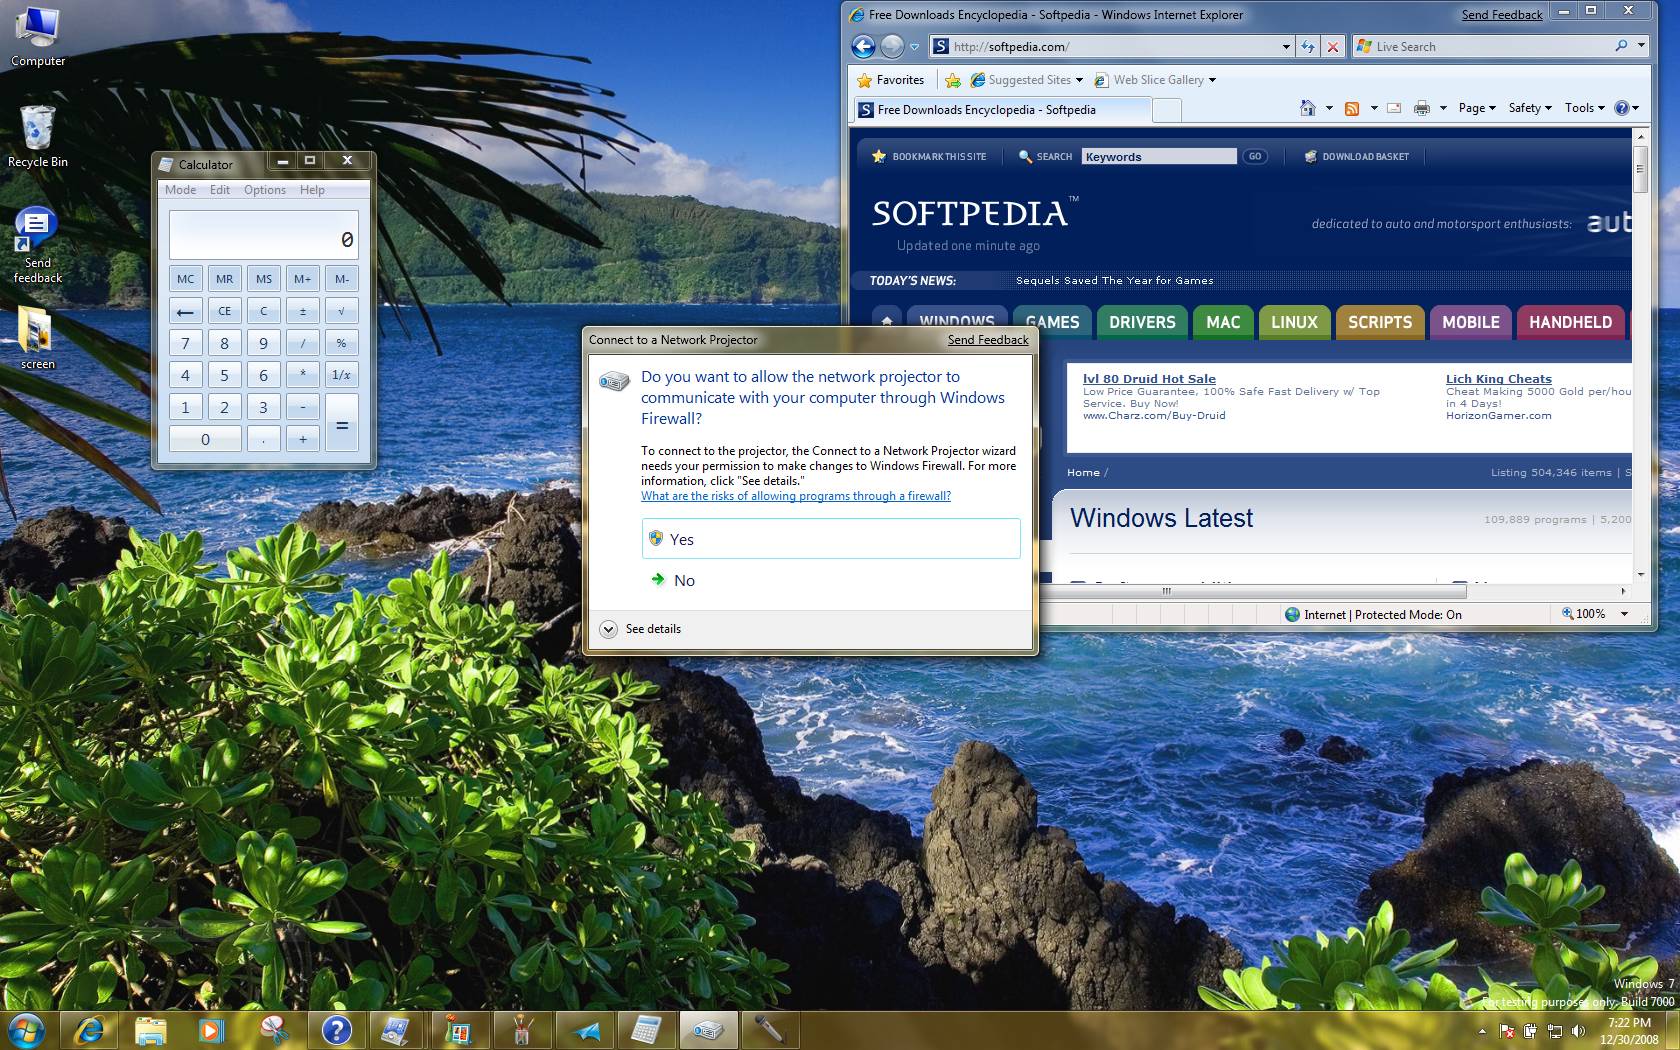 Windows 7 Beta Build 7000 Screenshots Gallery 798